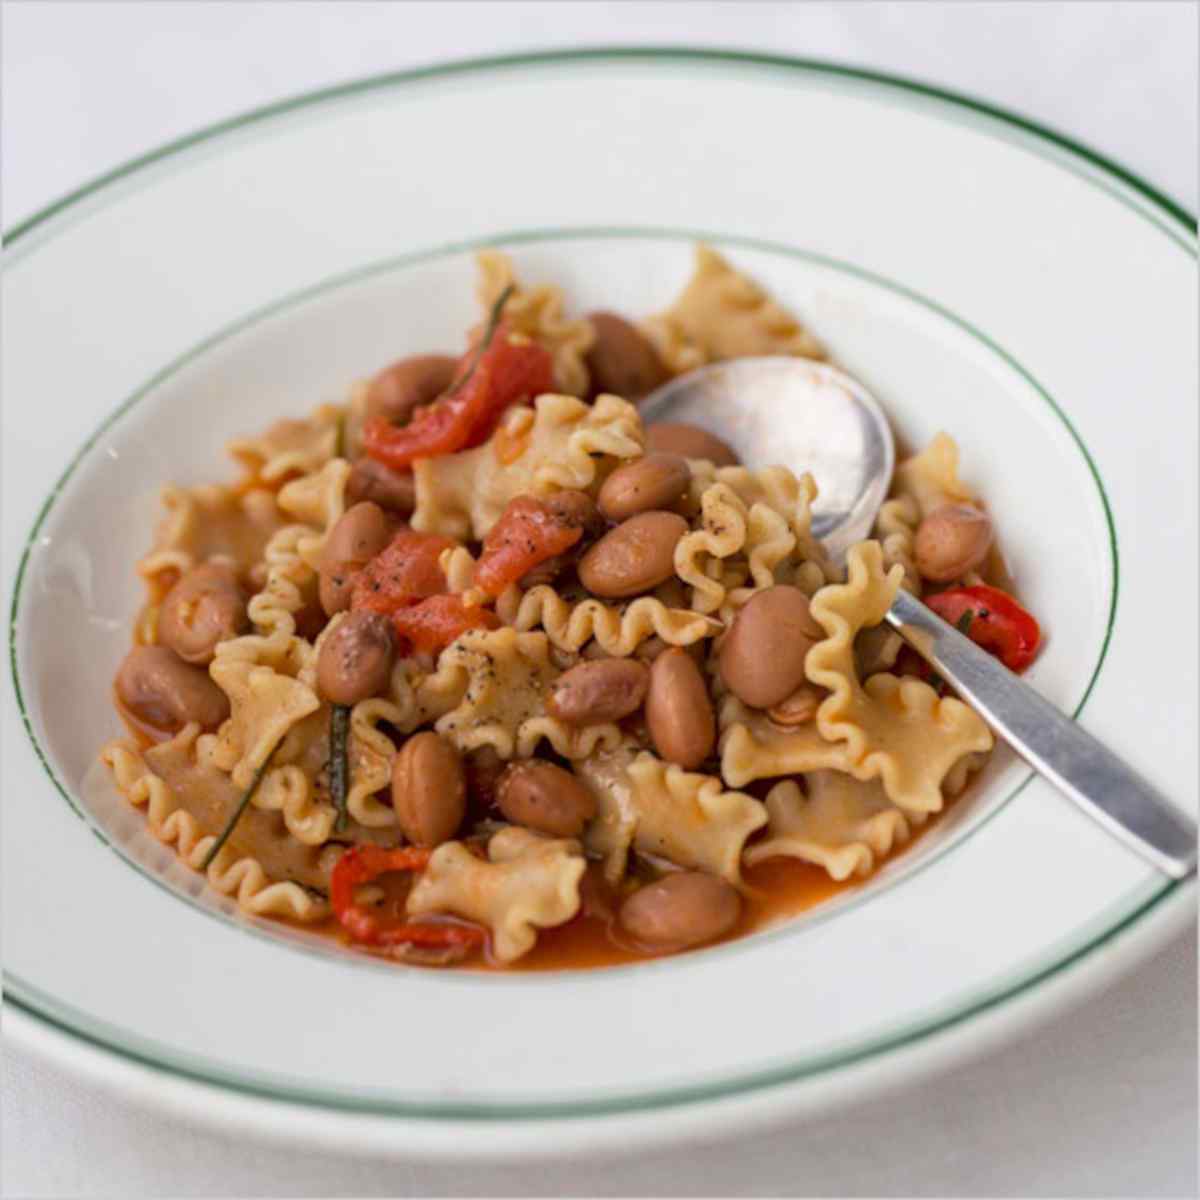 Pasta and borlotti beans in a bowl